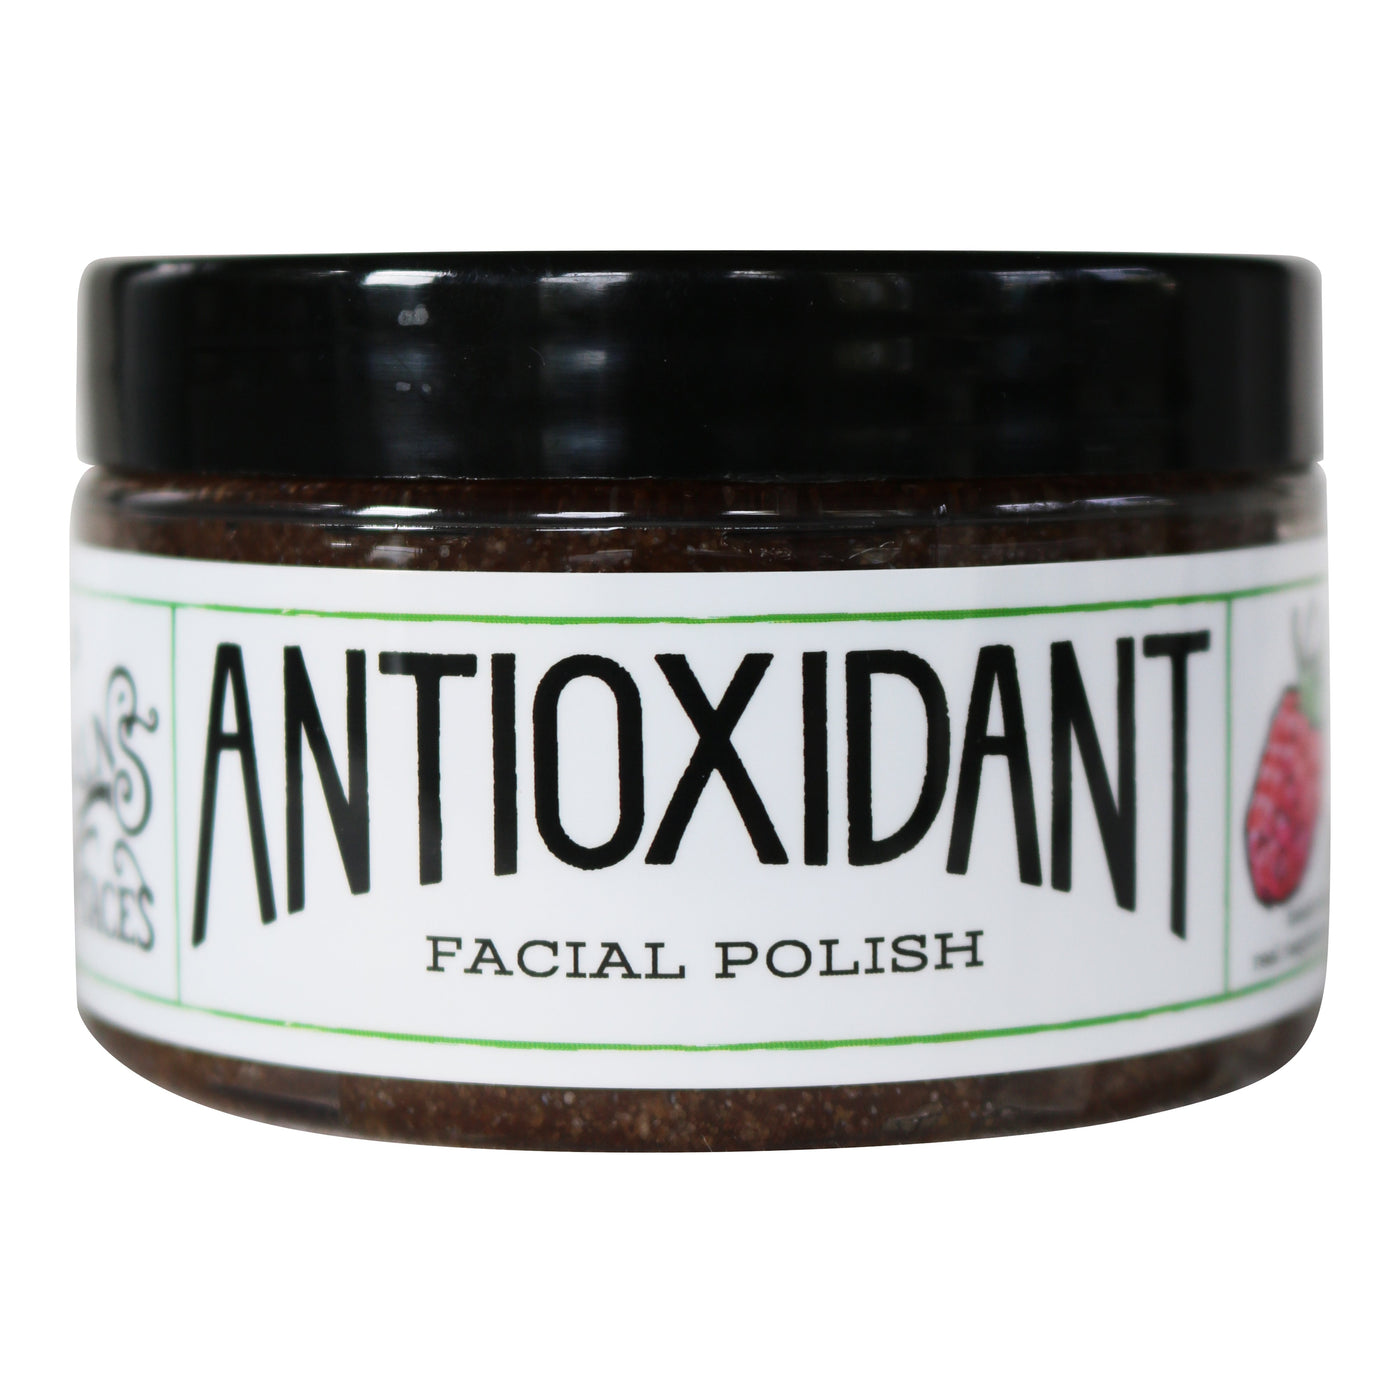 4 oz jar of antioxidant face polish scrub wrapped in a white label